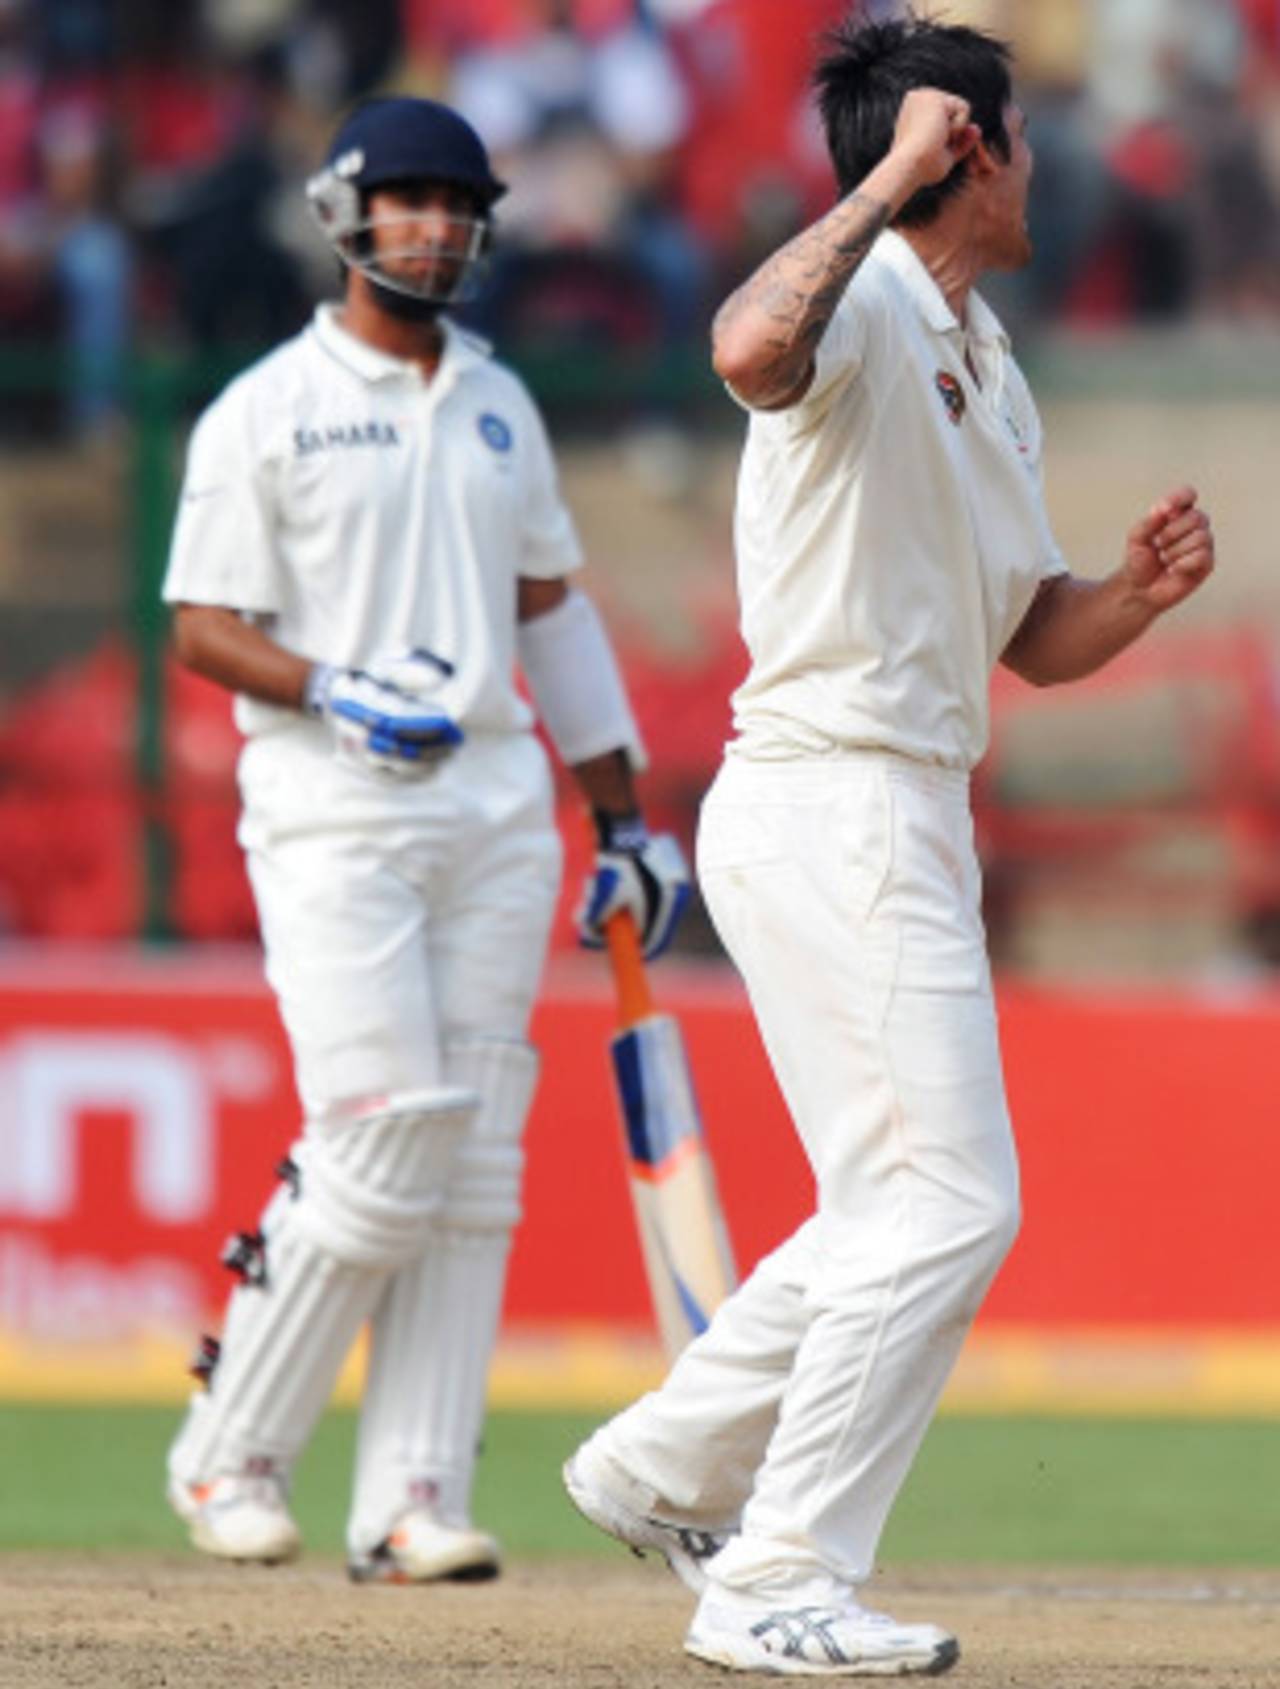 Mitchell Johnson ends Cheteshwar Pujara's maiden innings, India v Australia, 2nd Test, Bangalore, 3rd day, October 11, 2010